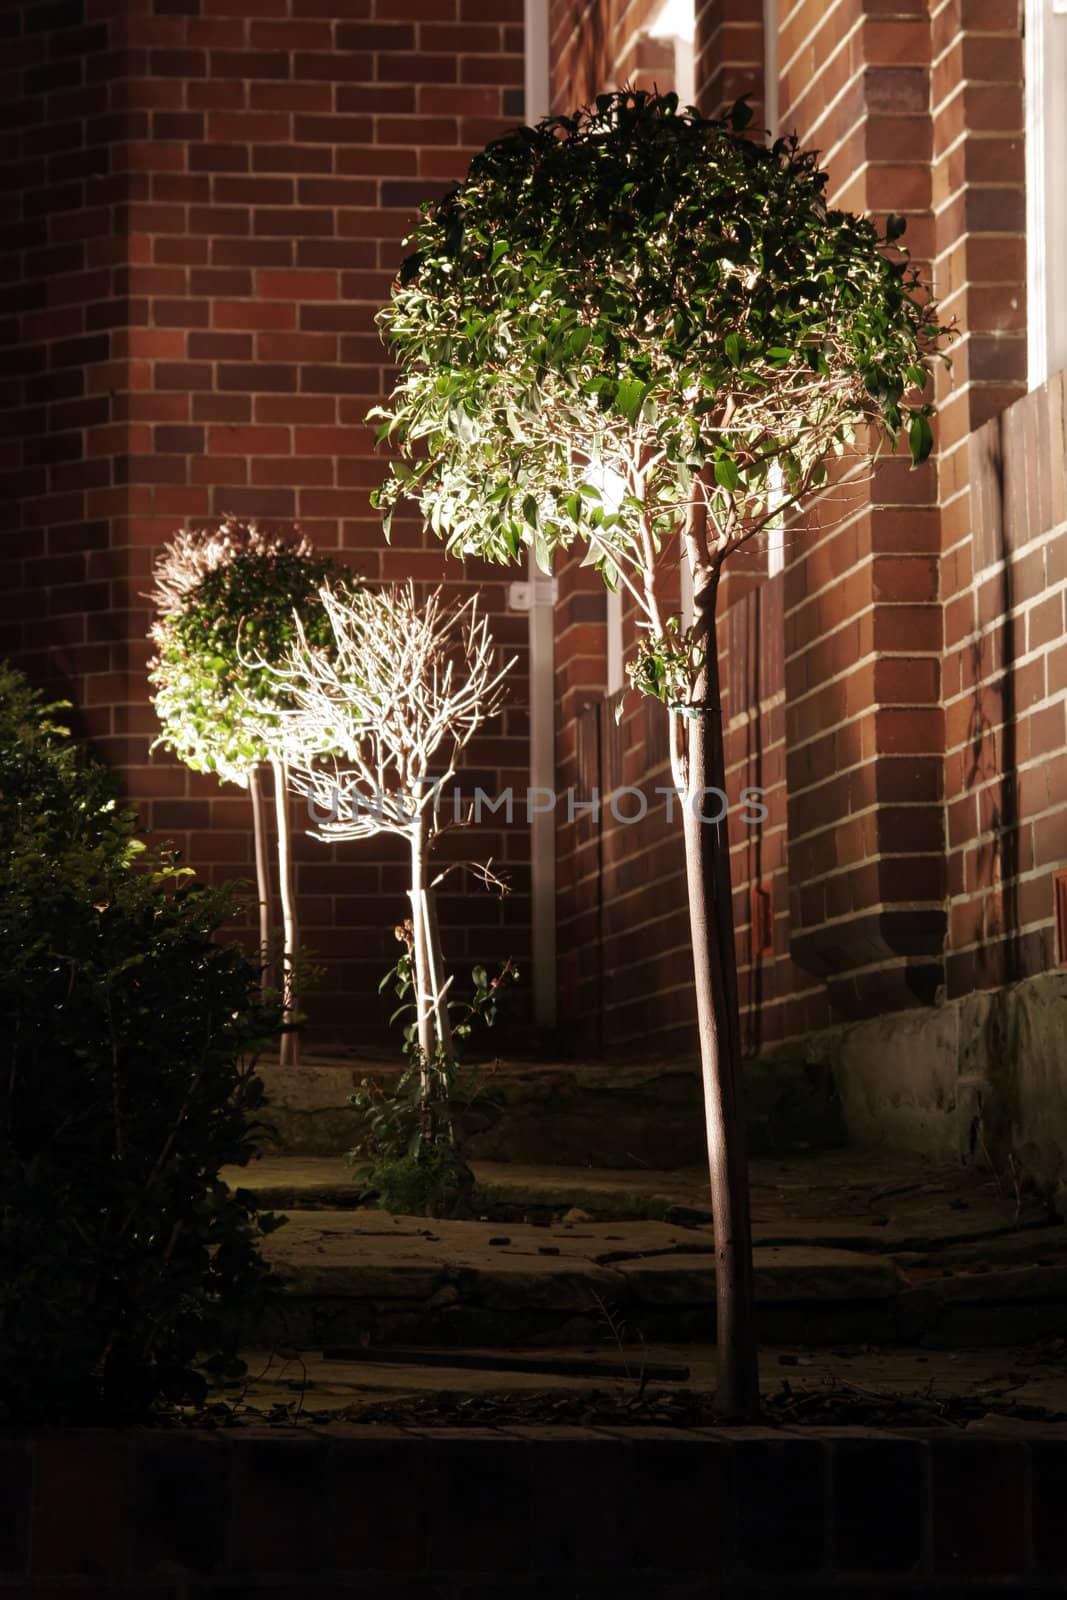 Night Tree by thorsten